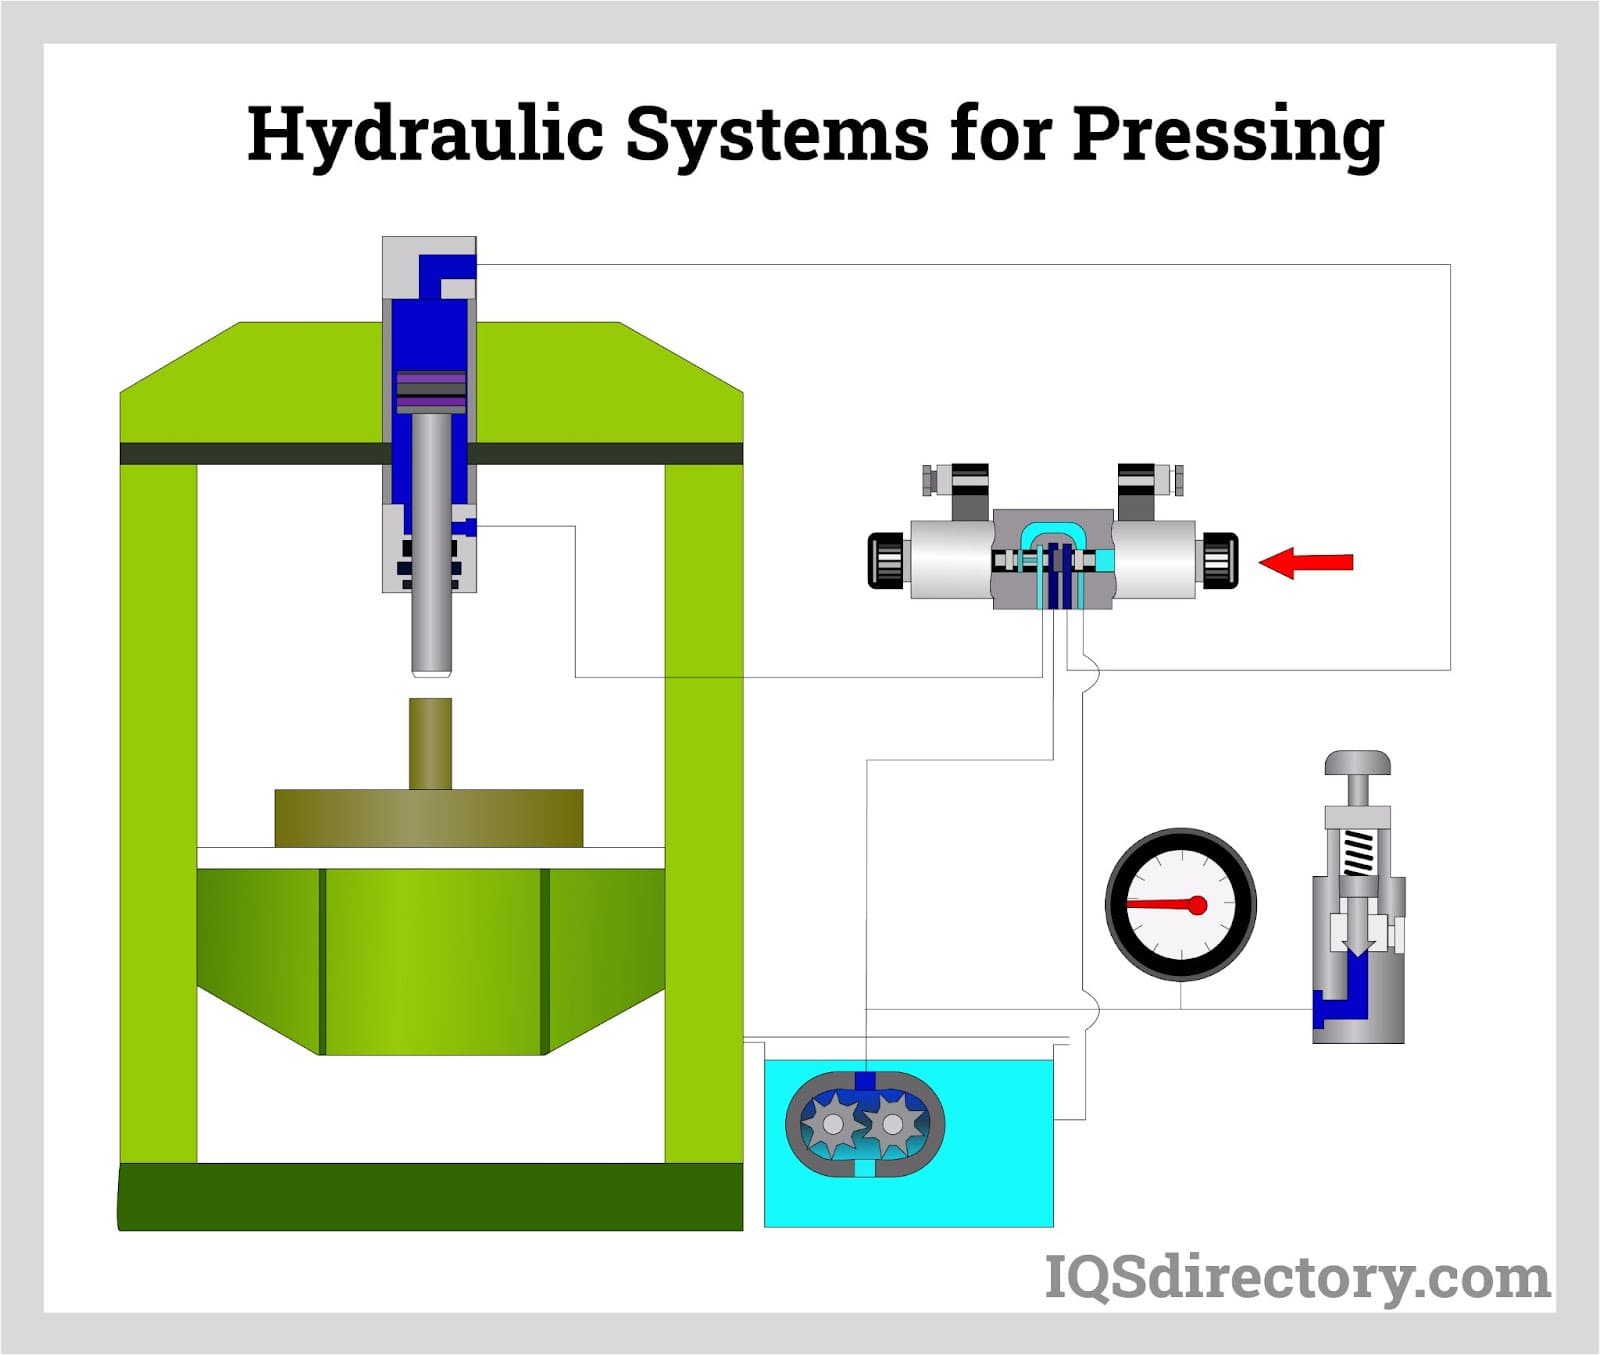 Hydraulic Systems for Pressing